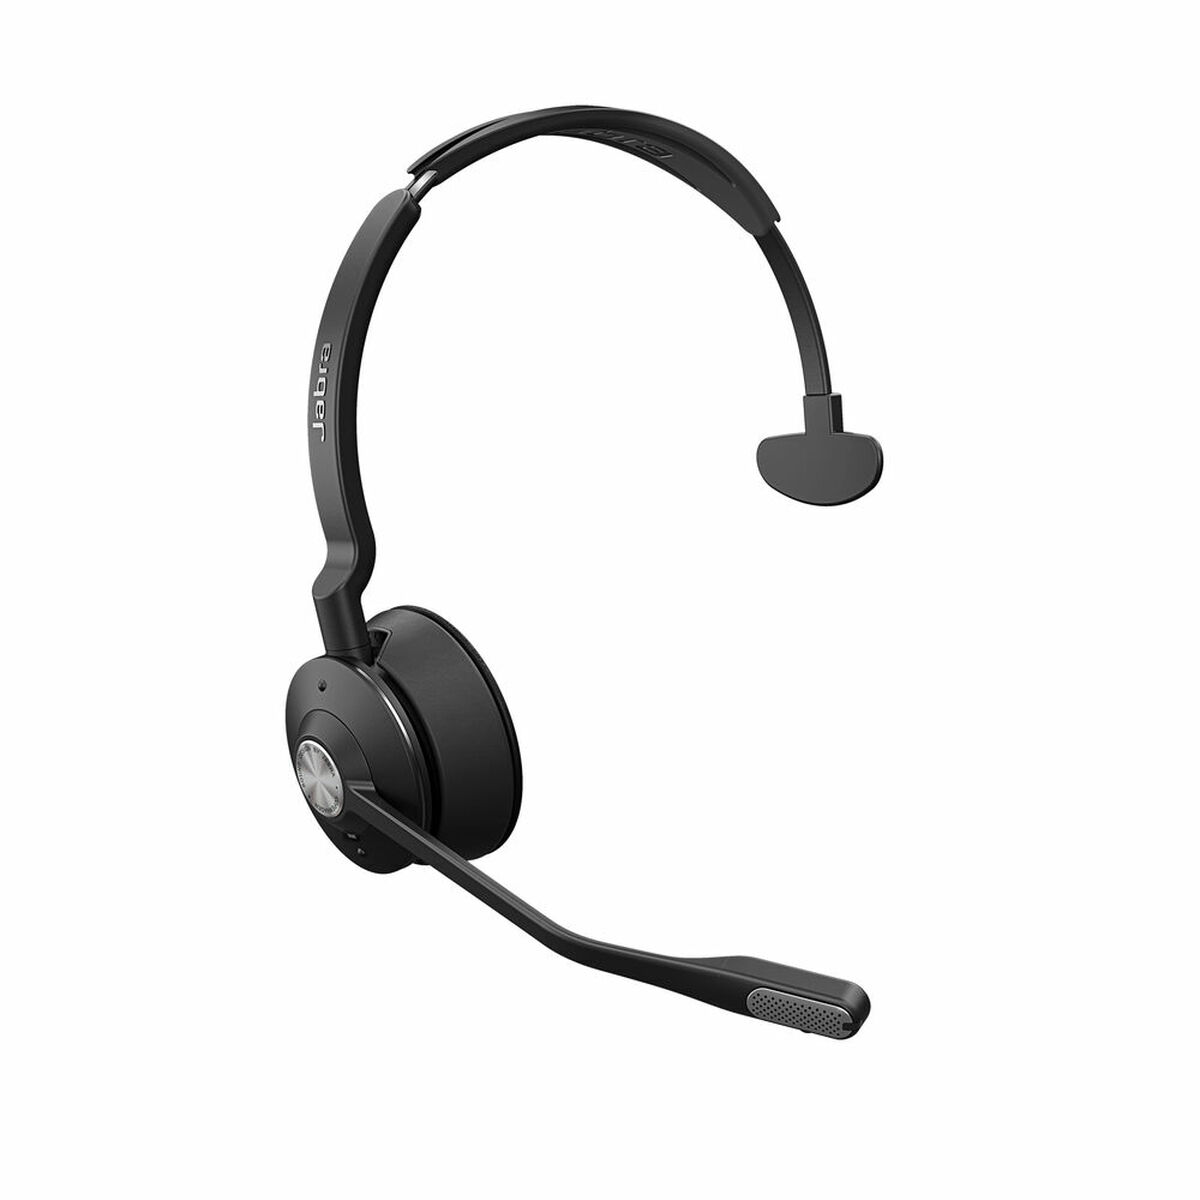 JABRA 75, In-ear Bluetooth Schwarz kopfhörer